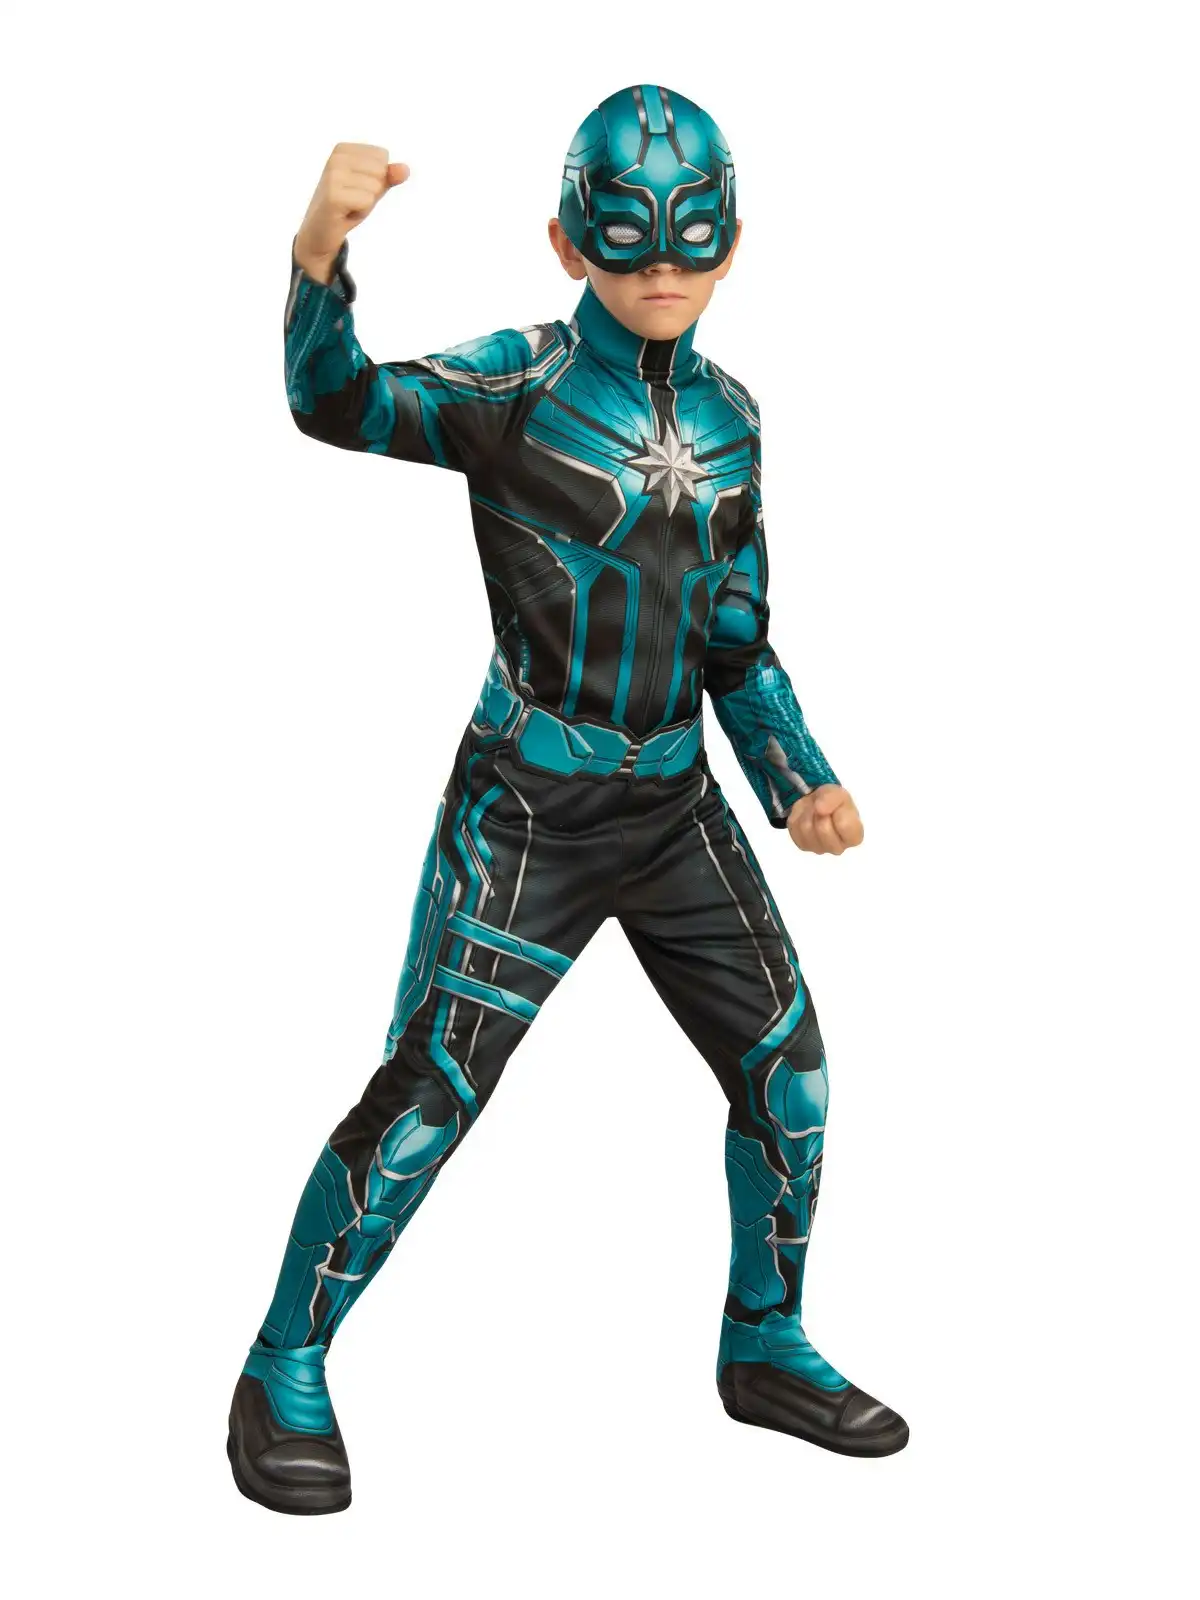 Disney Yon Rogg Classic Captain Marvel Dress Up Costume Kids/Boys Size L